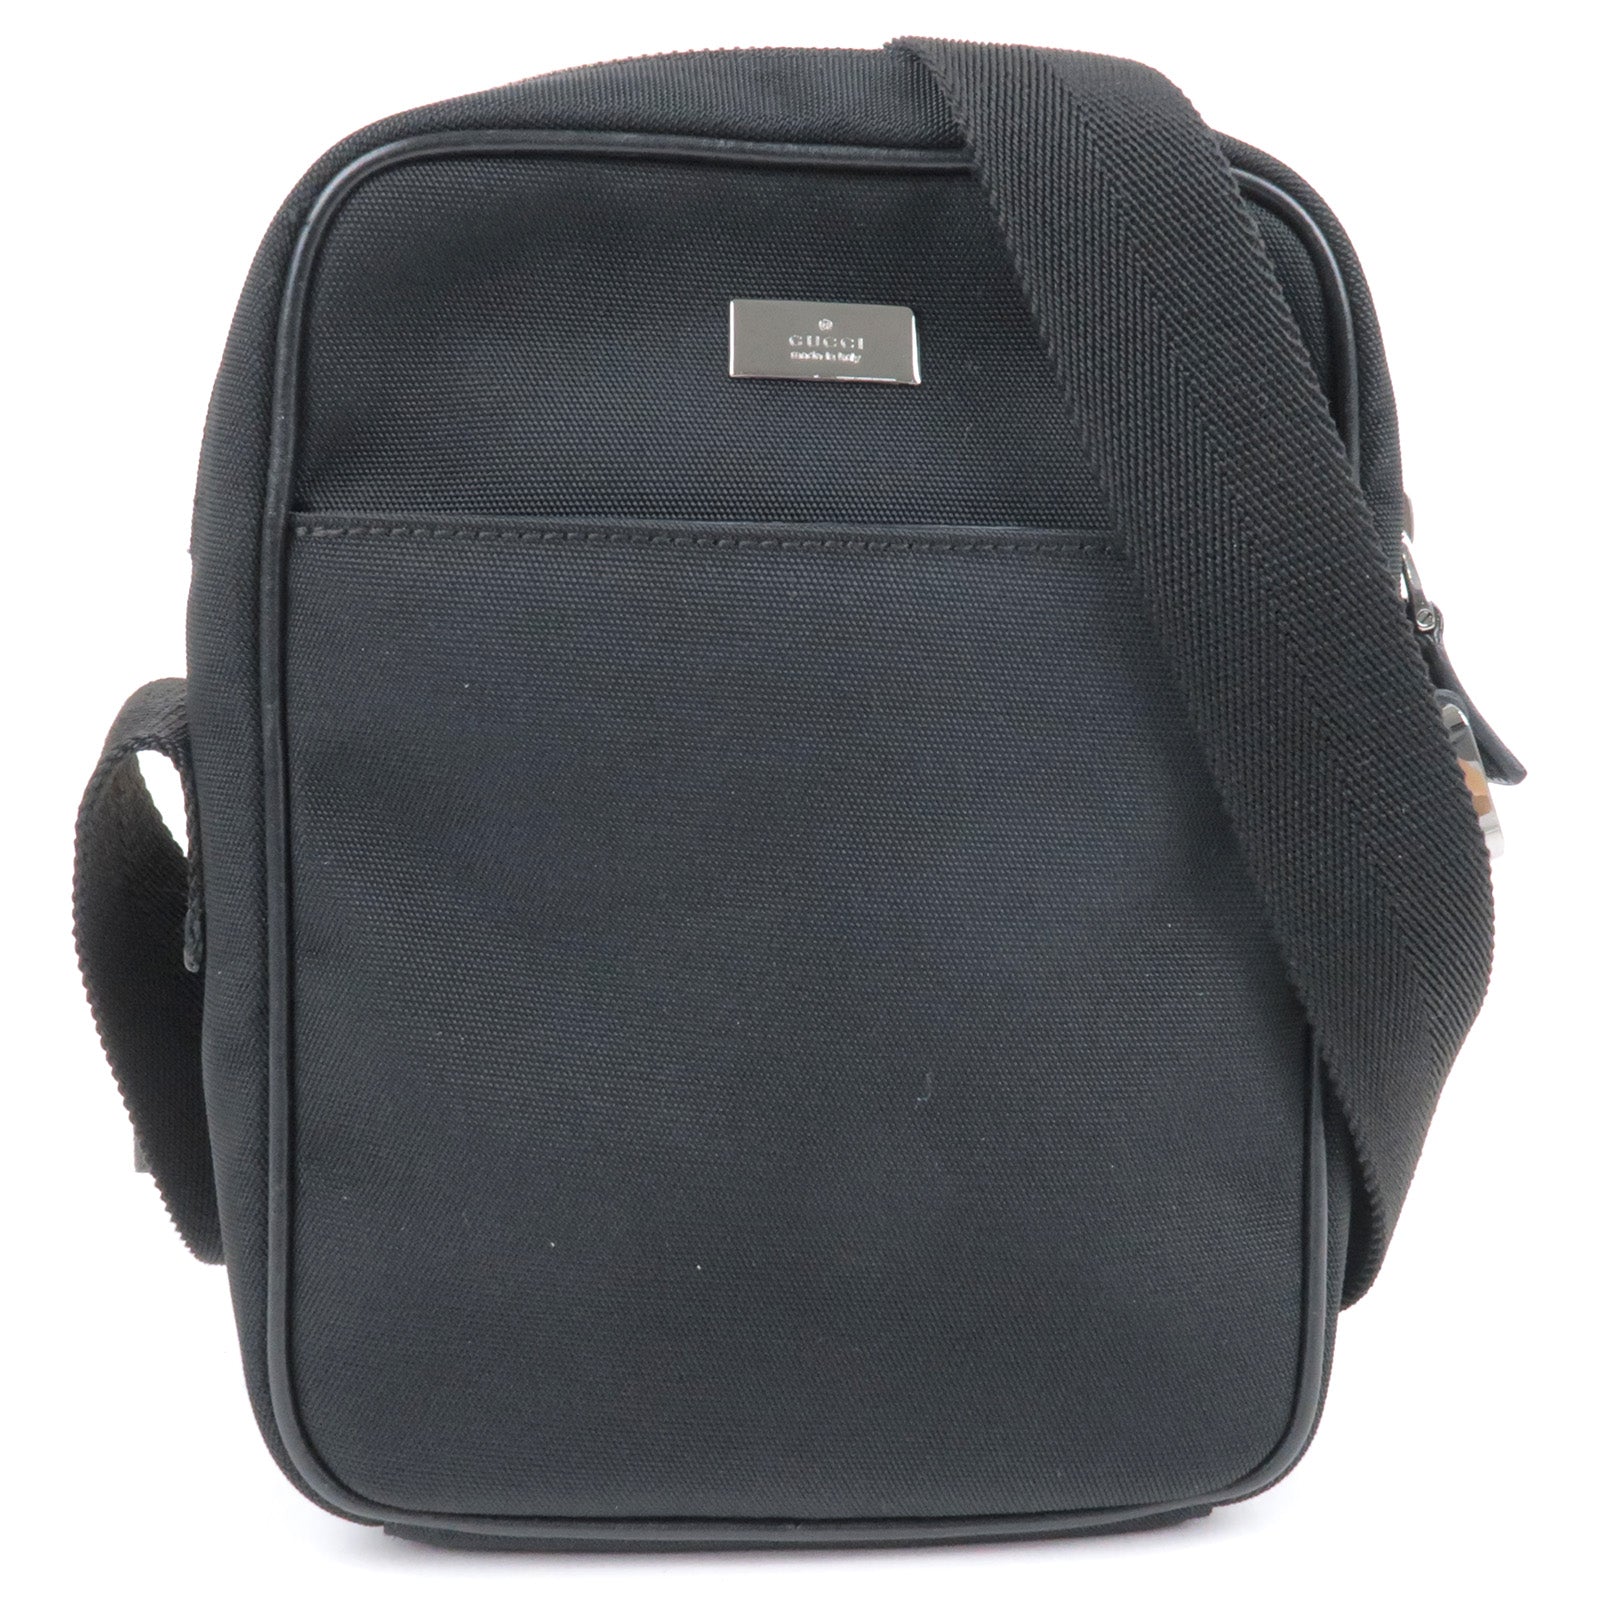 GUCCI-Nylon-Canvas-Leather-Shoulder-Bag-Purse-Black-122754